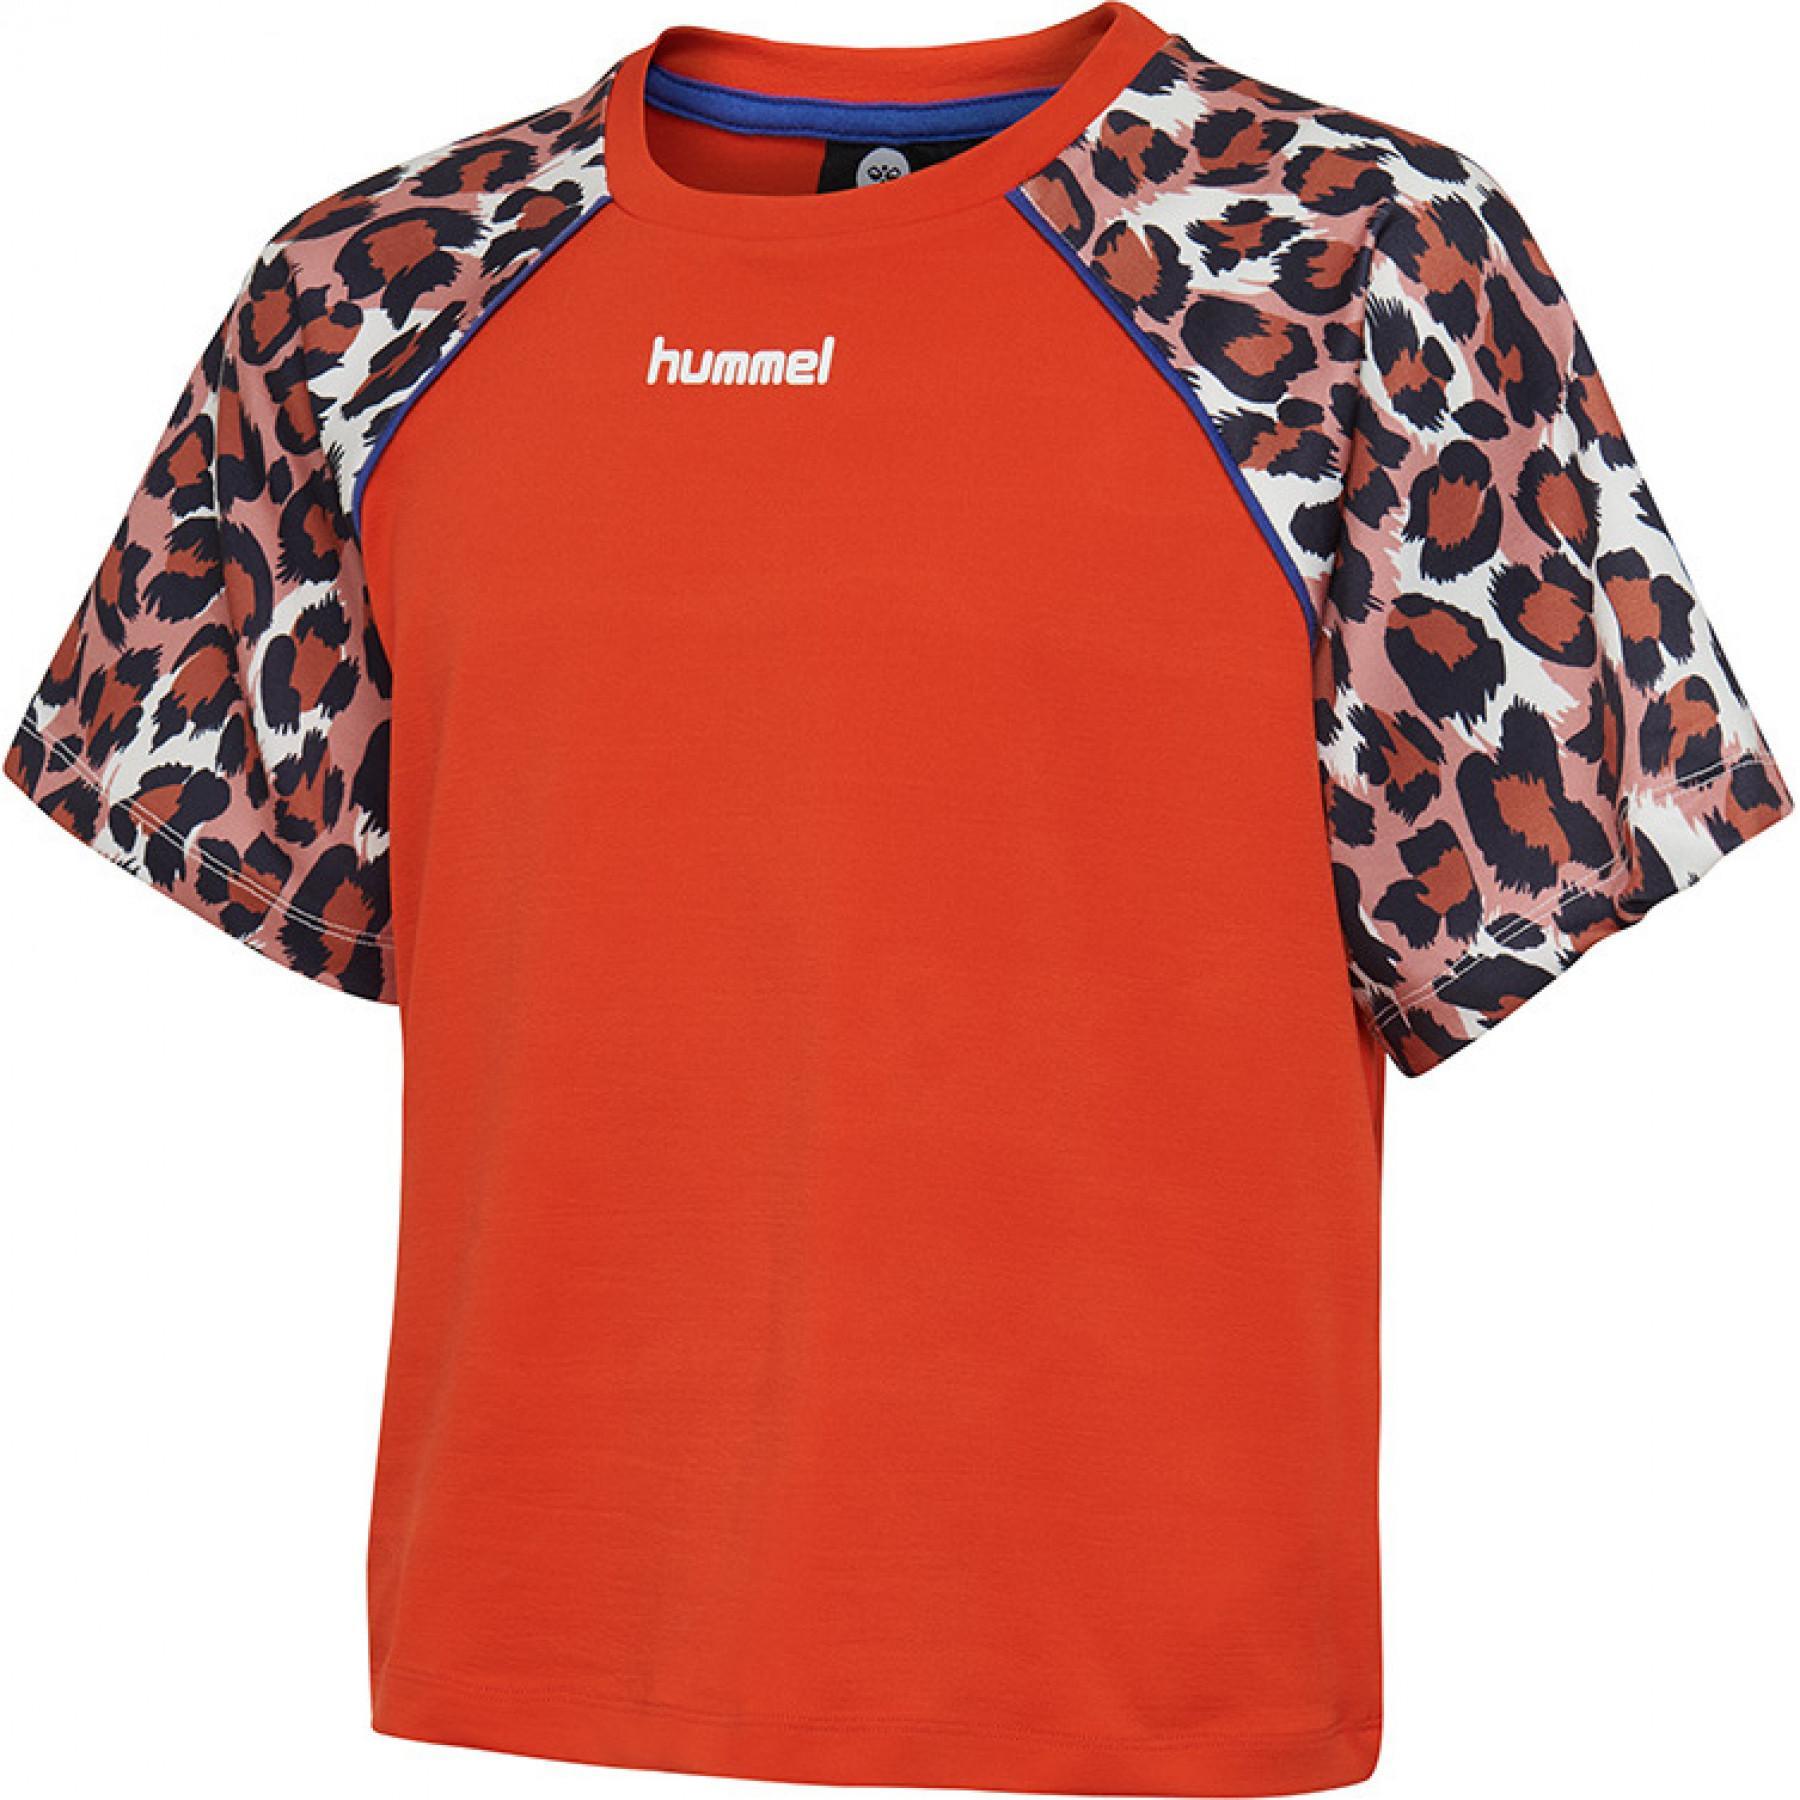 Junior T-shirt Hummel hmlkatrine